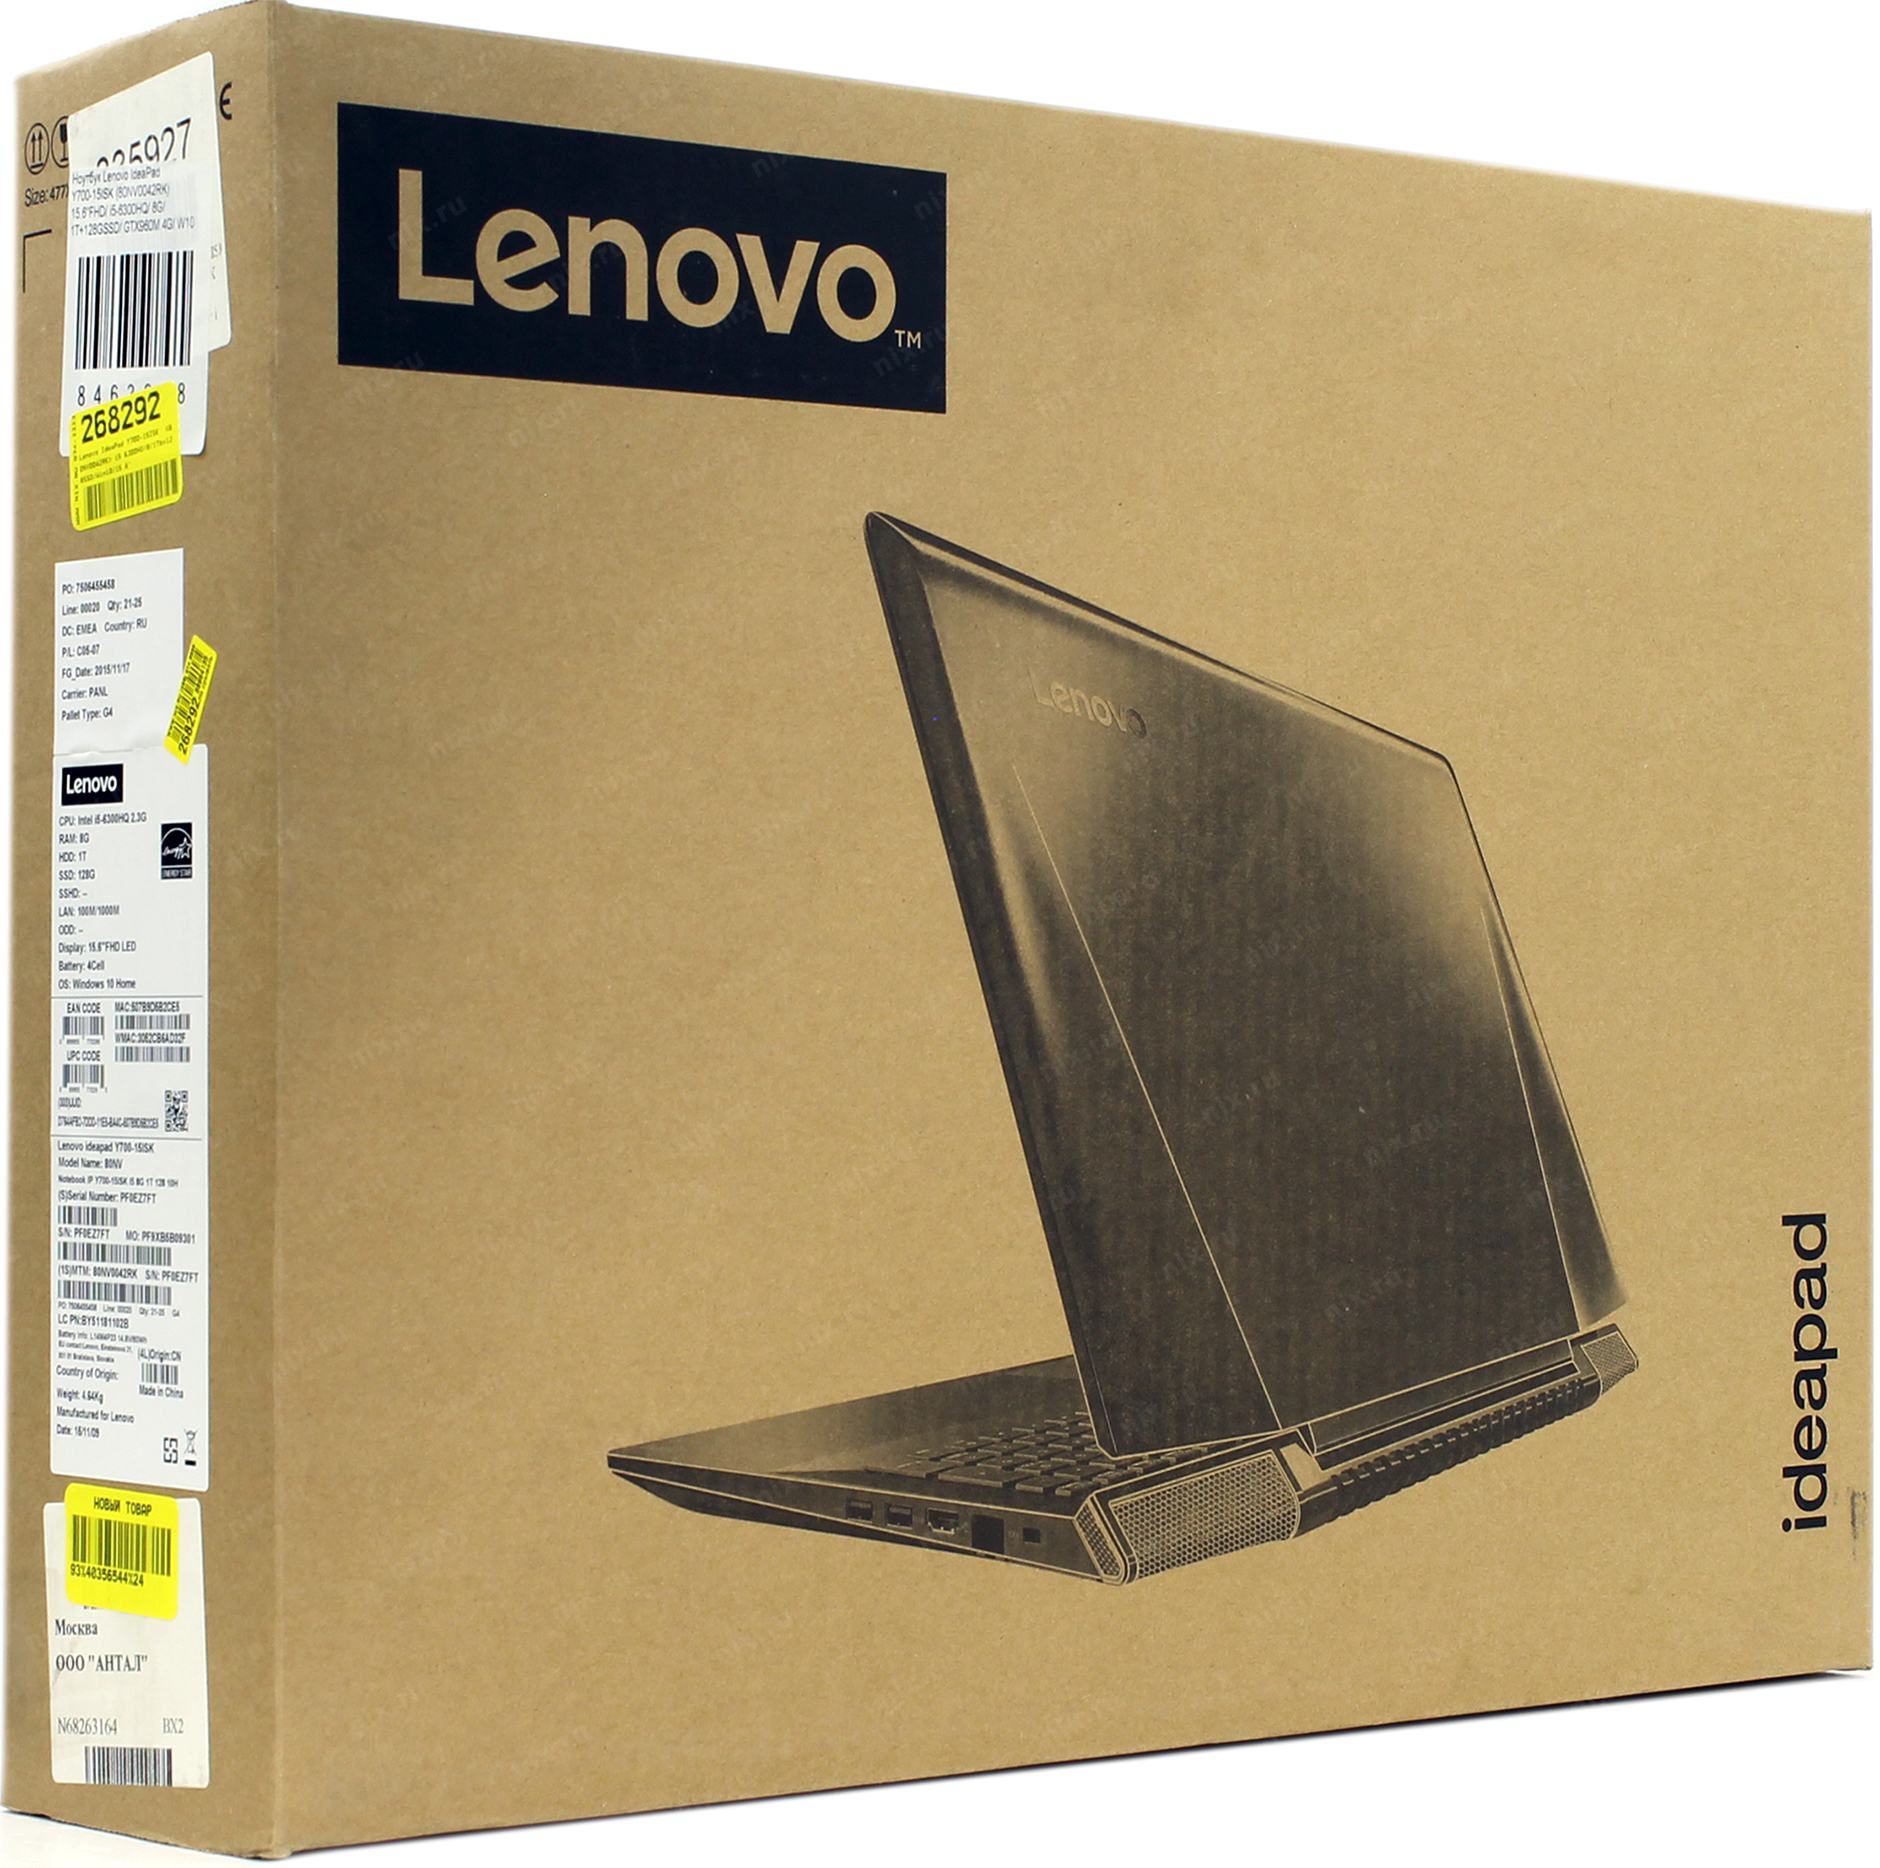 Купить Ноутбук Lenovo Ideapad Y700-15 80nv00d0pb